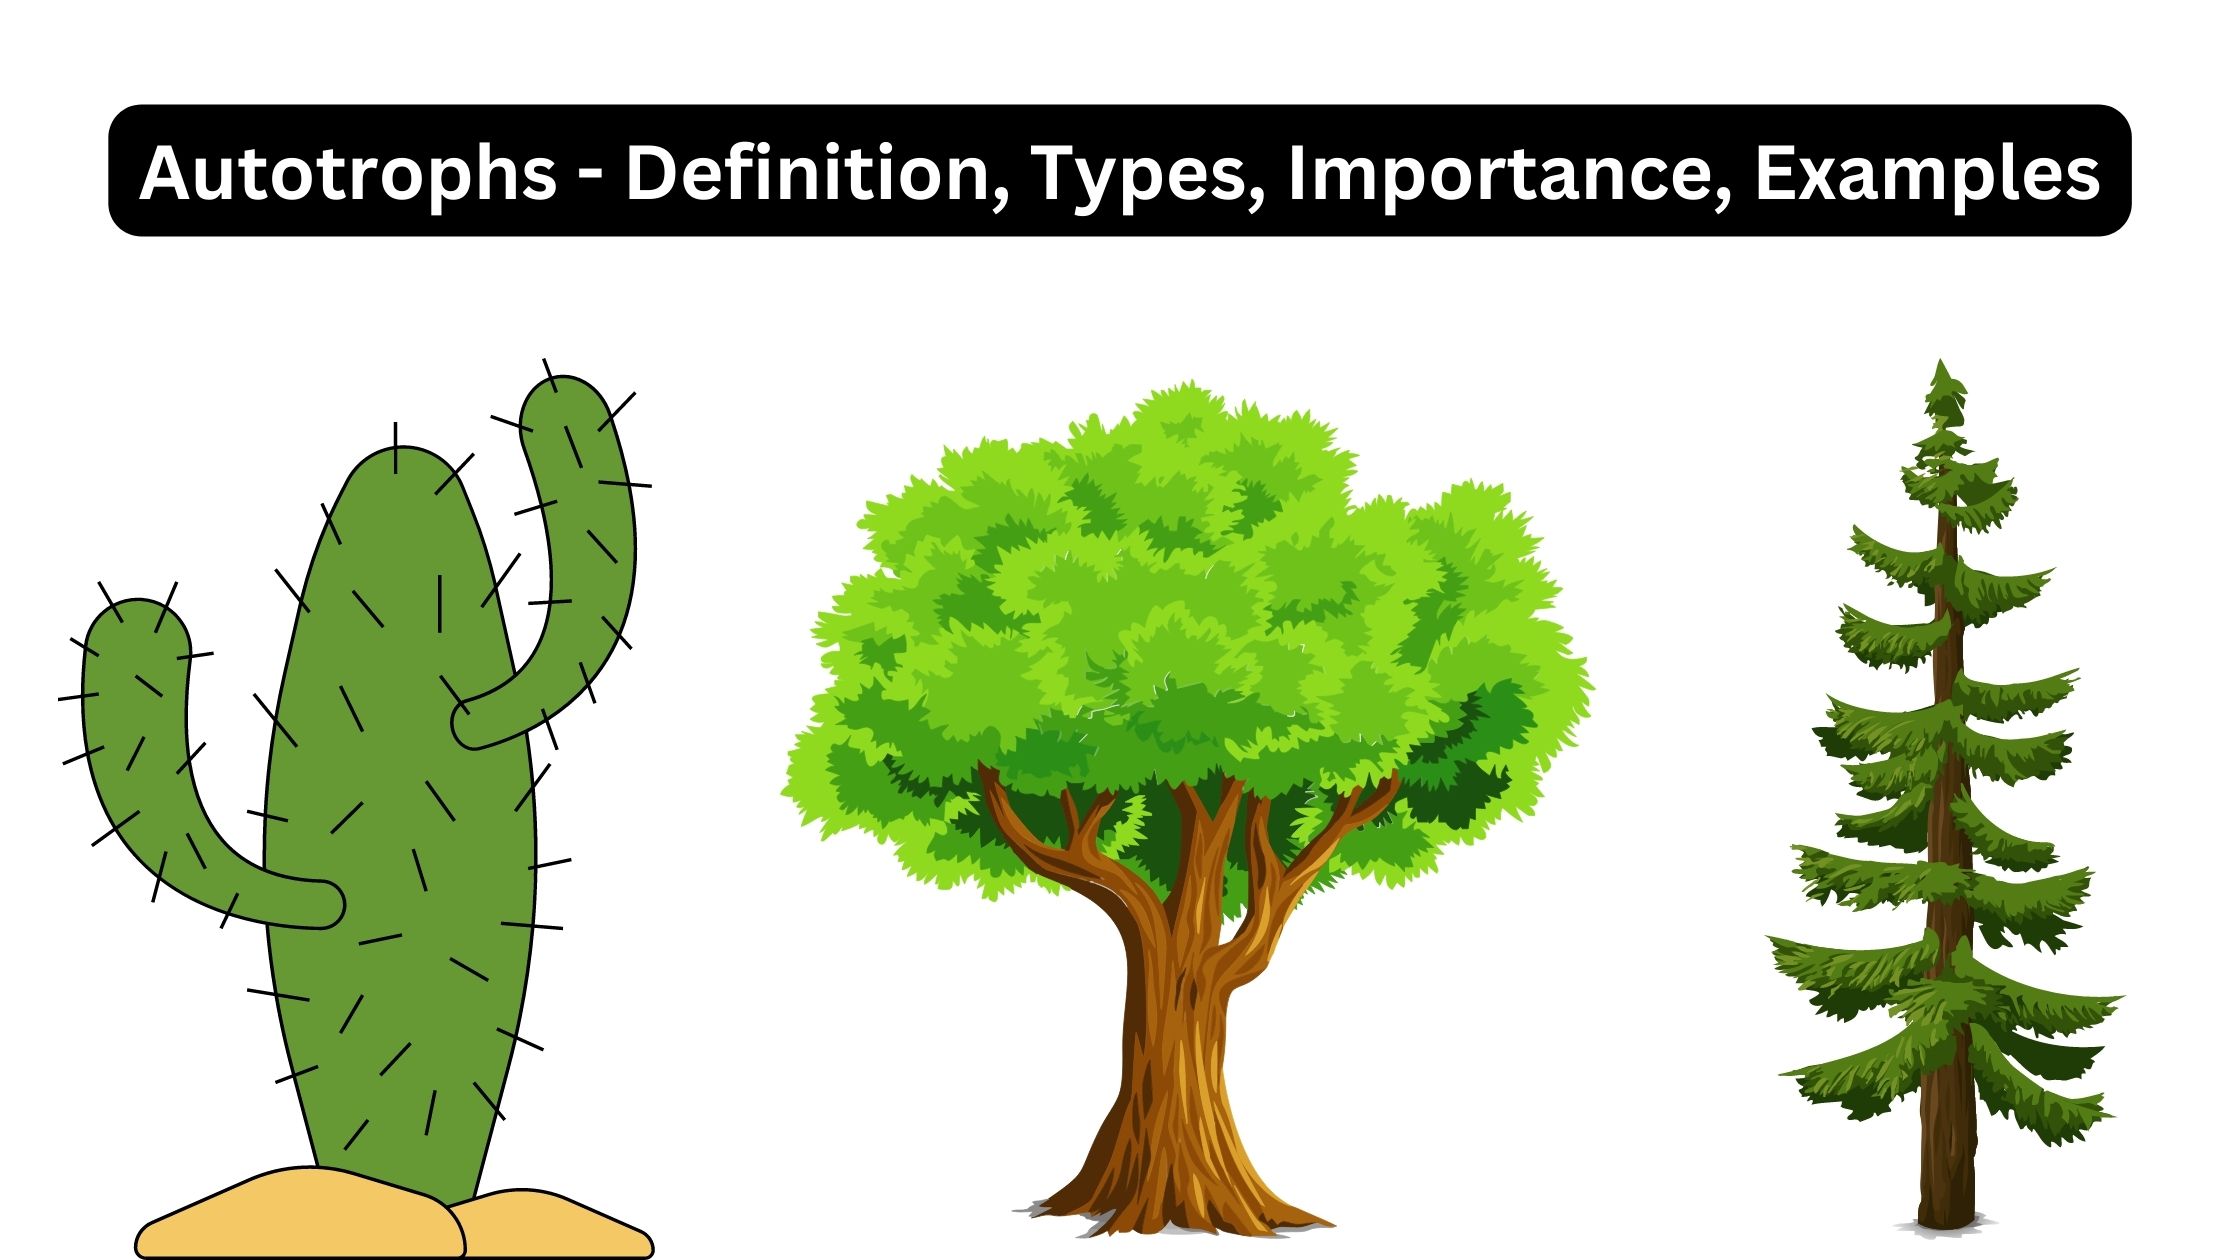 Autotrophs - Definition, Types, Importance, Examples